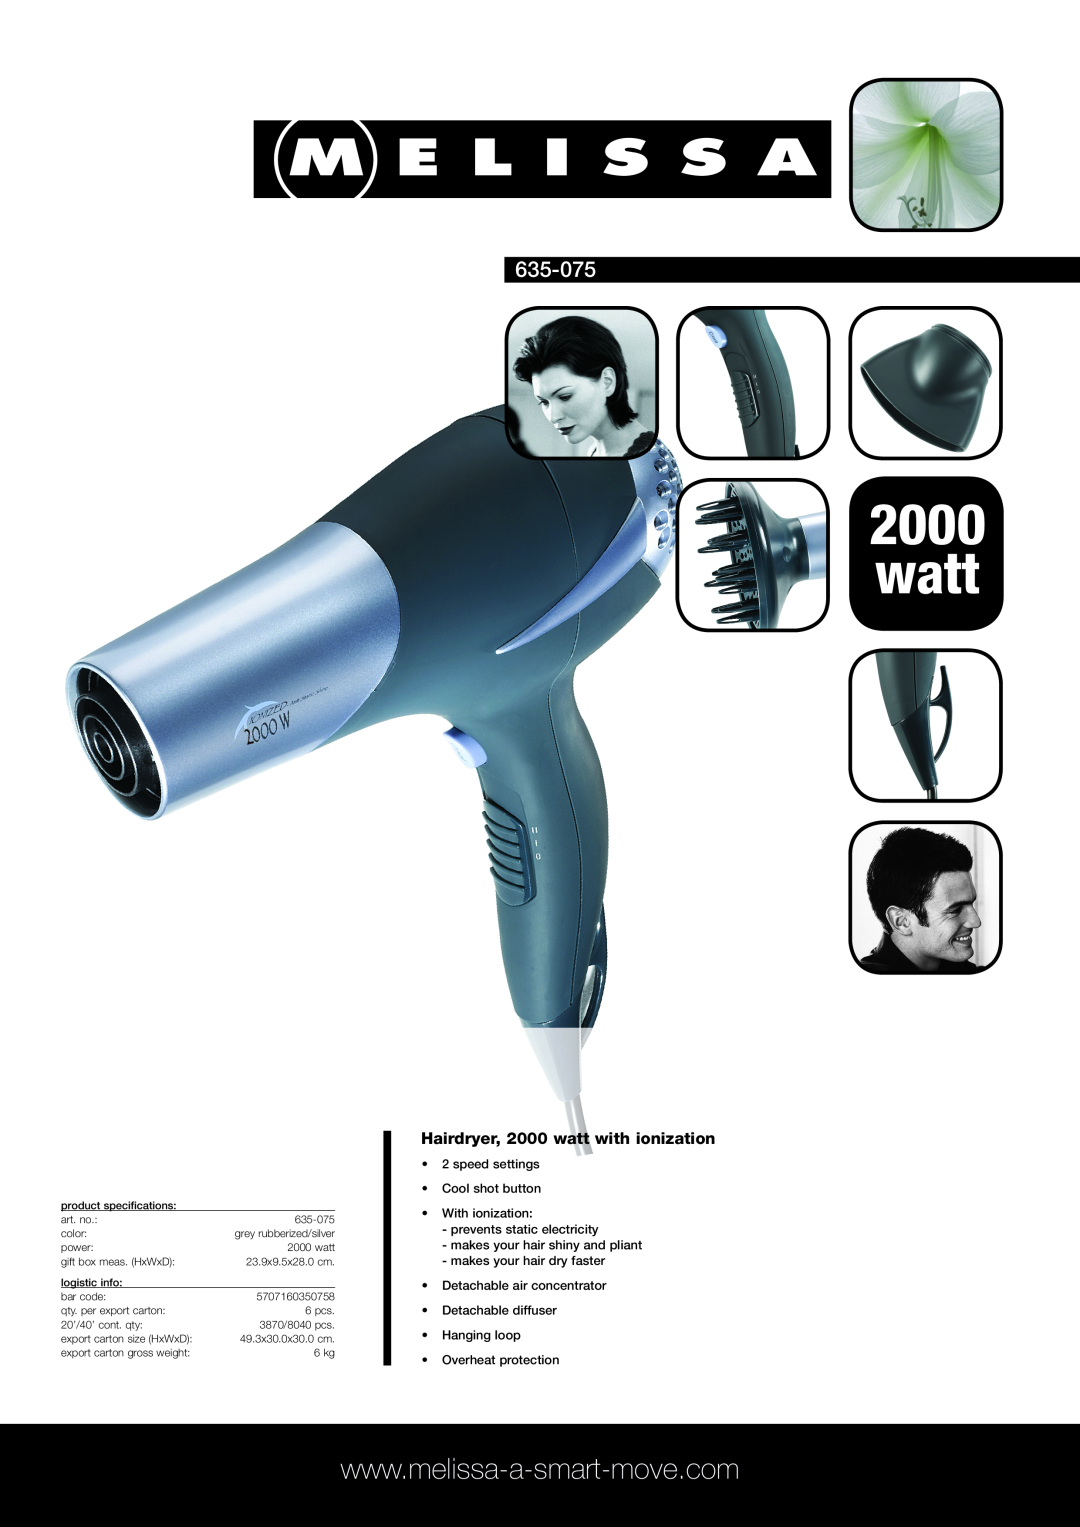 Melissa 635-075 specifications Hairdryer, 2000 watt with ionization 